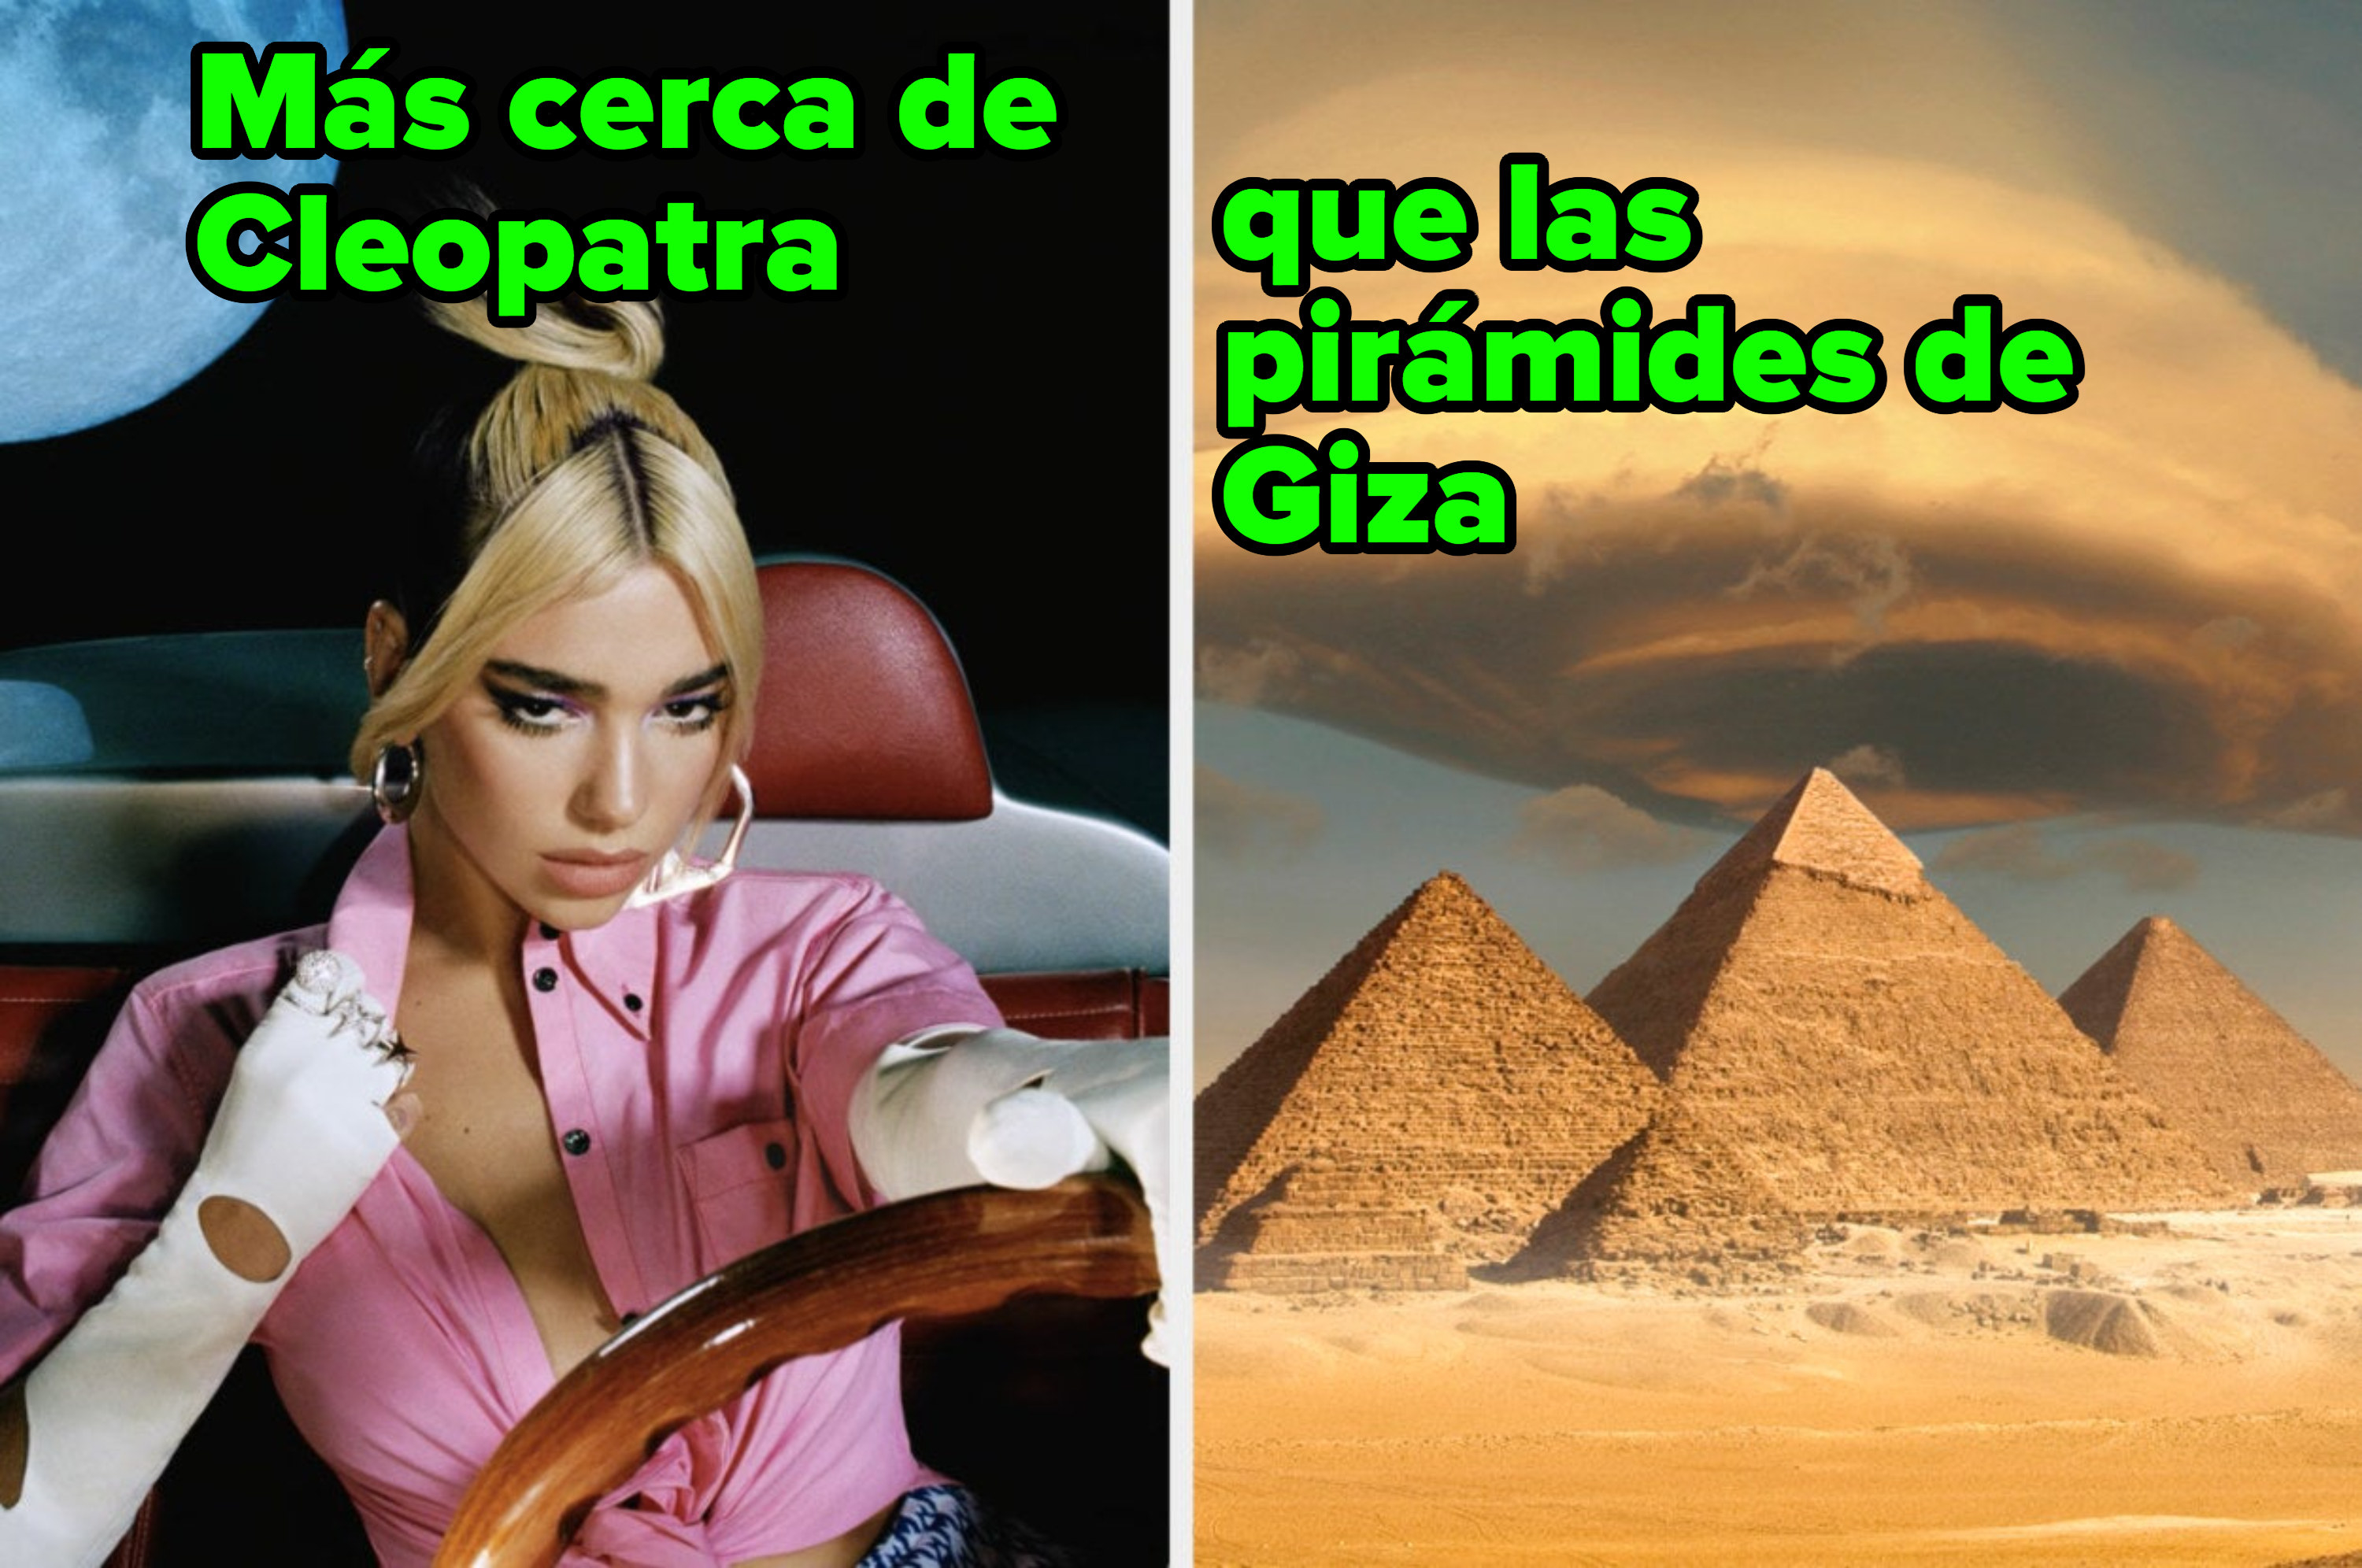 Future Nostalgia and the Pyramids